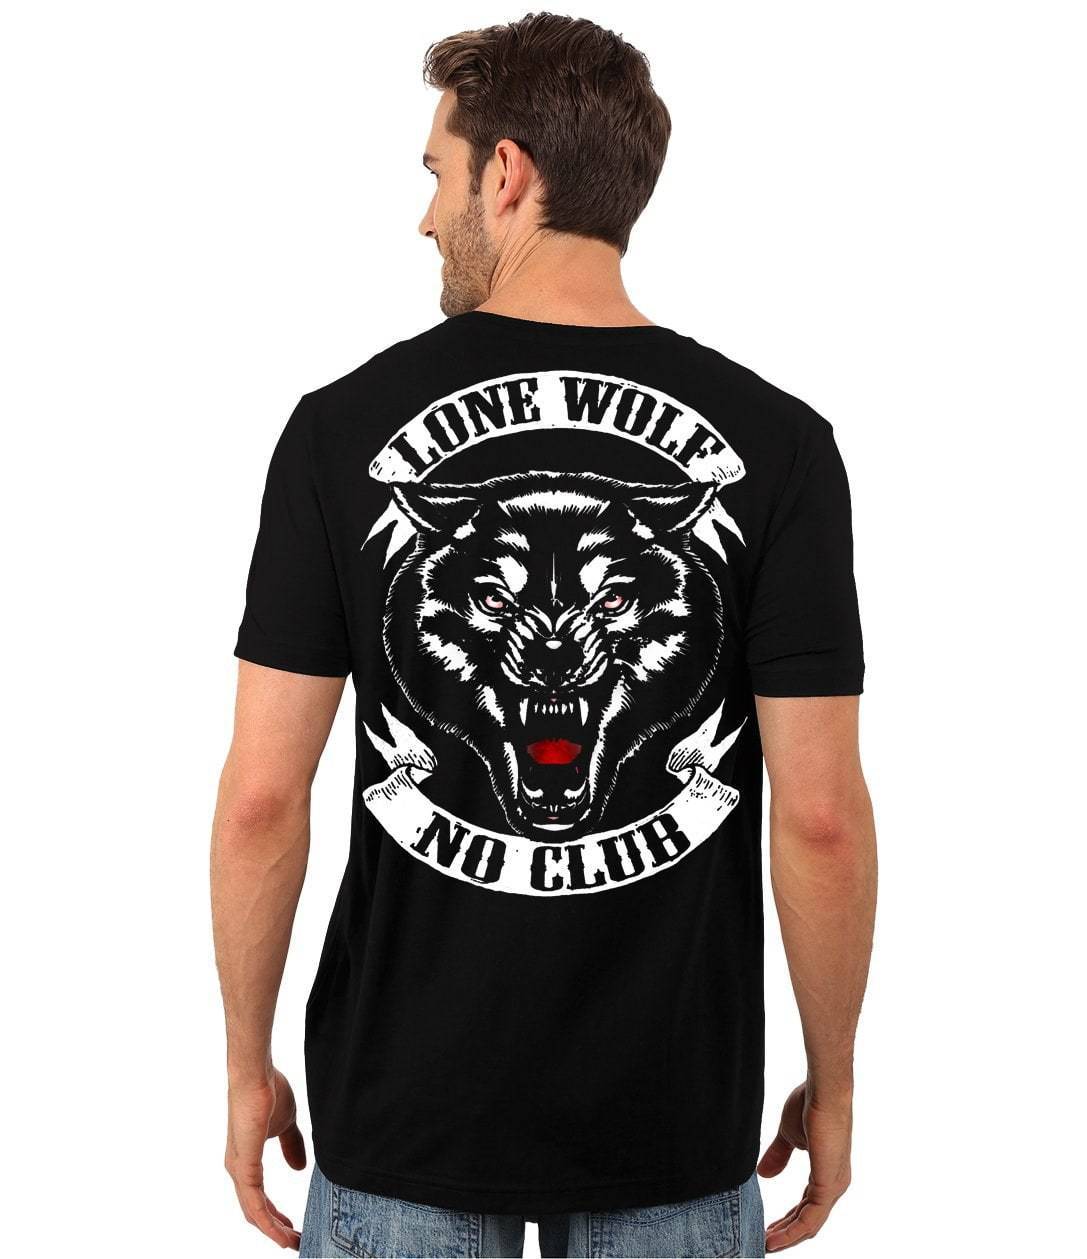 Lone Wolf, No Club T-Shirt - American Legend Rider